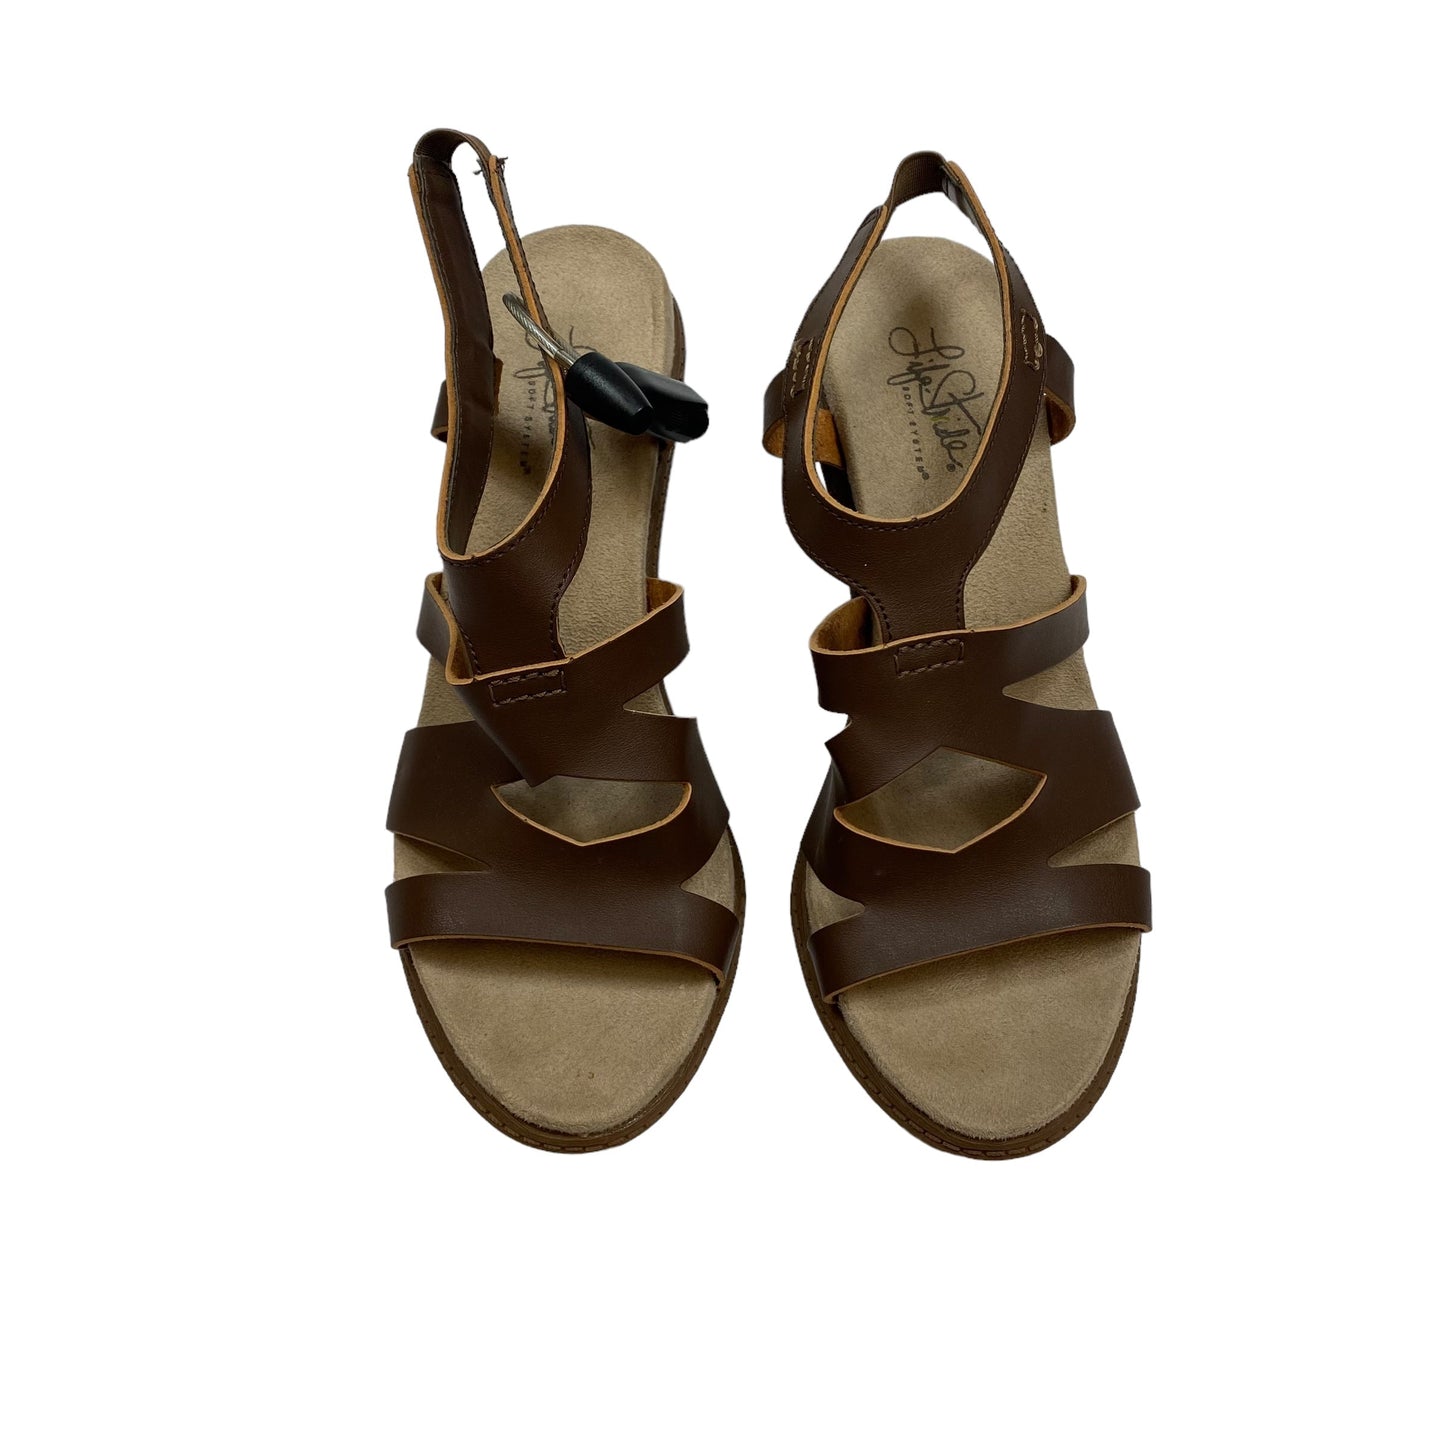 Brown Sandals Heels Wedge Life Stride, Size 8